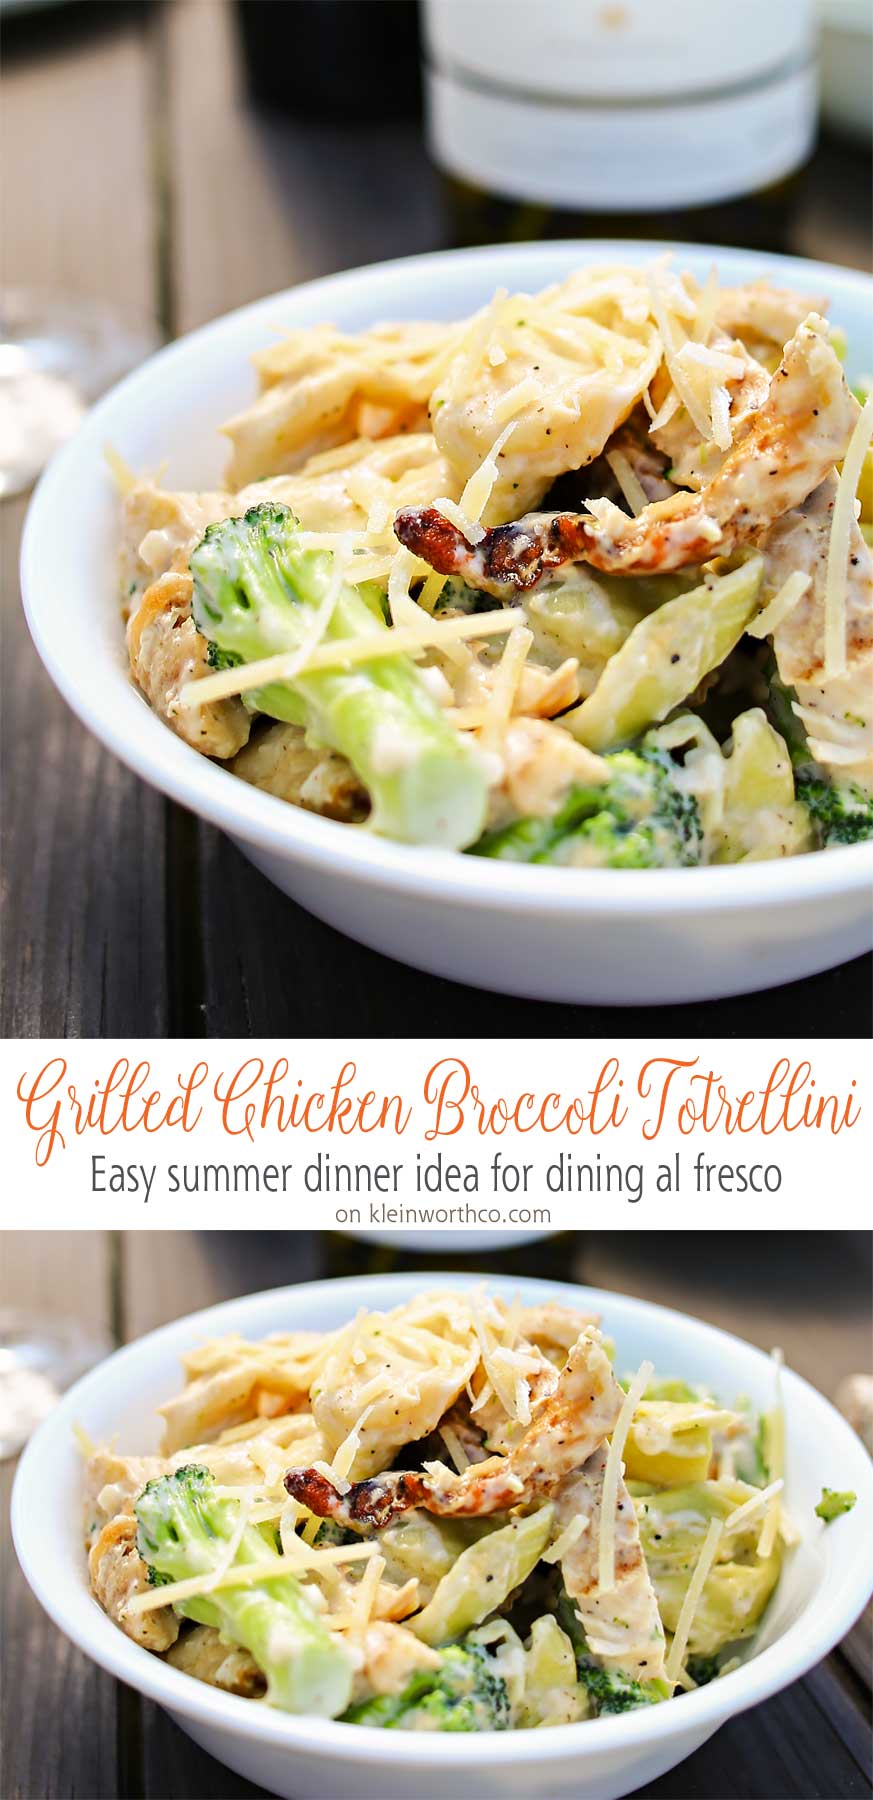 Grilled chicken, broccoli & tortellini in a creamy garlic cheese sauce makes this Grilled Chicken Broccoli Tortellini a delicious easy family dinner idea.